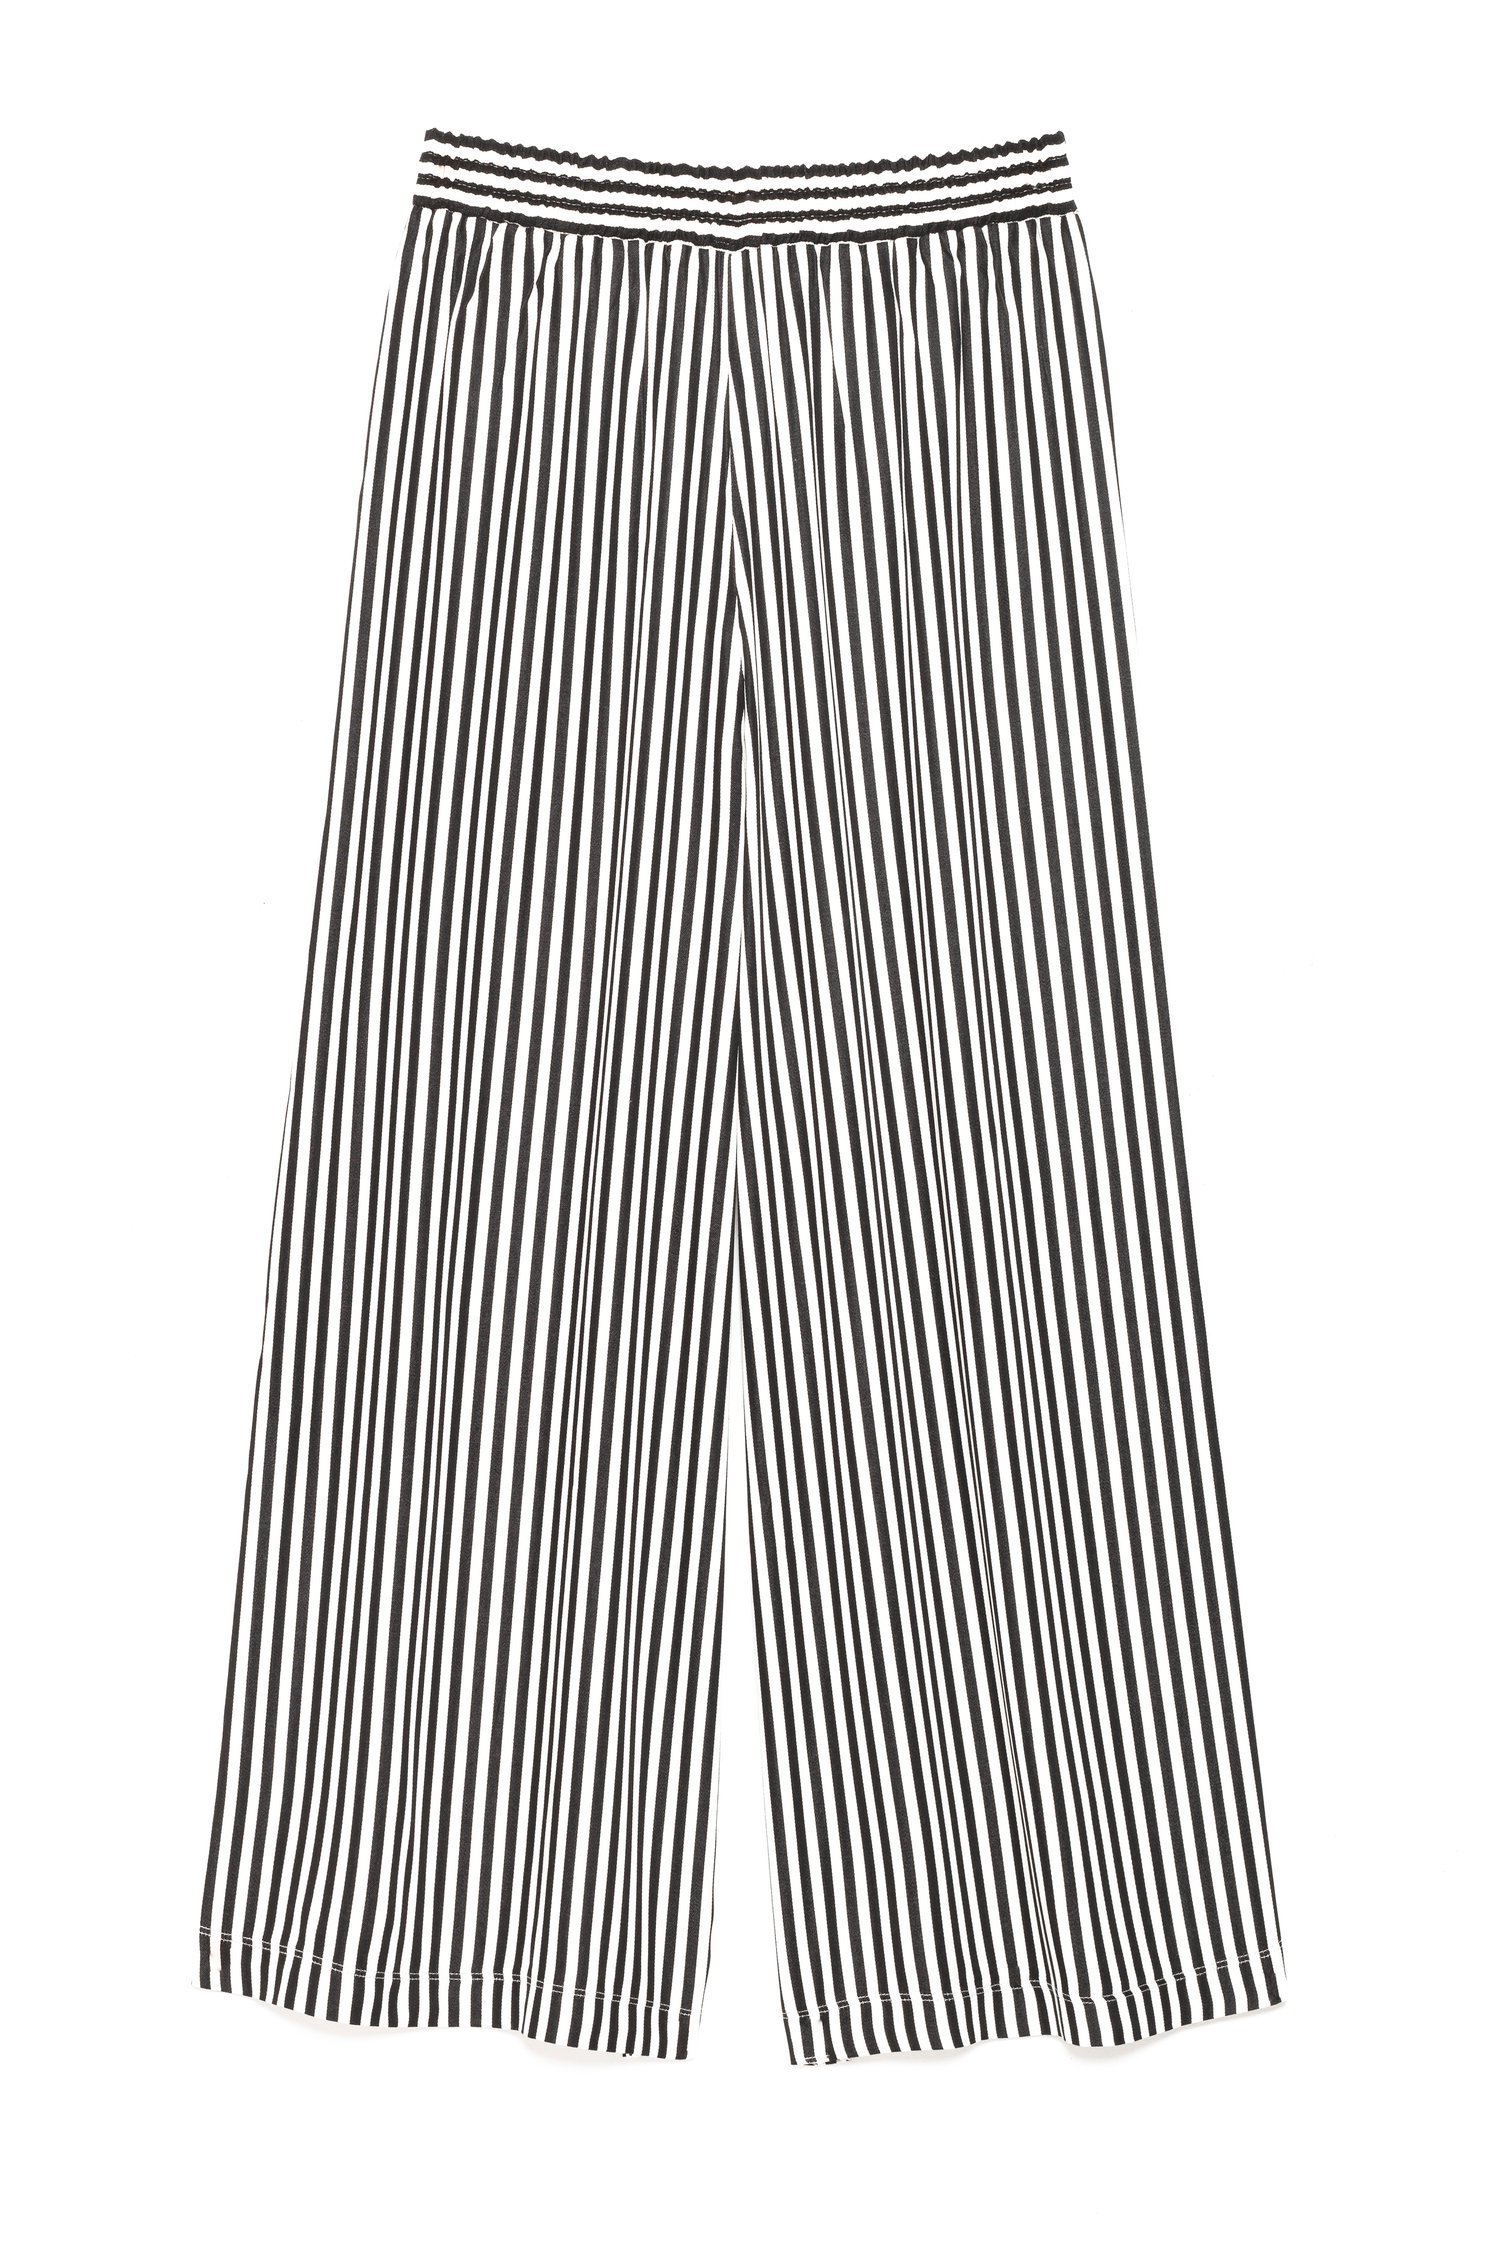 Image of Pantalon large twill OSCAR RAYÉ 119€ -50%